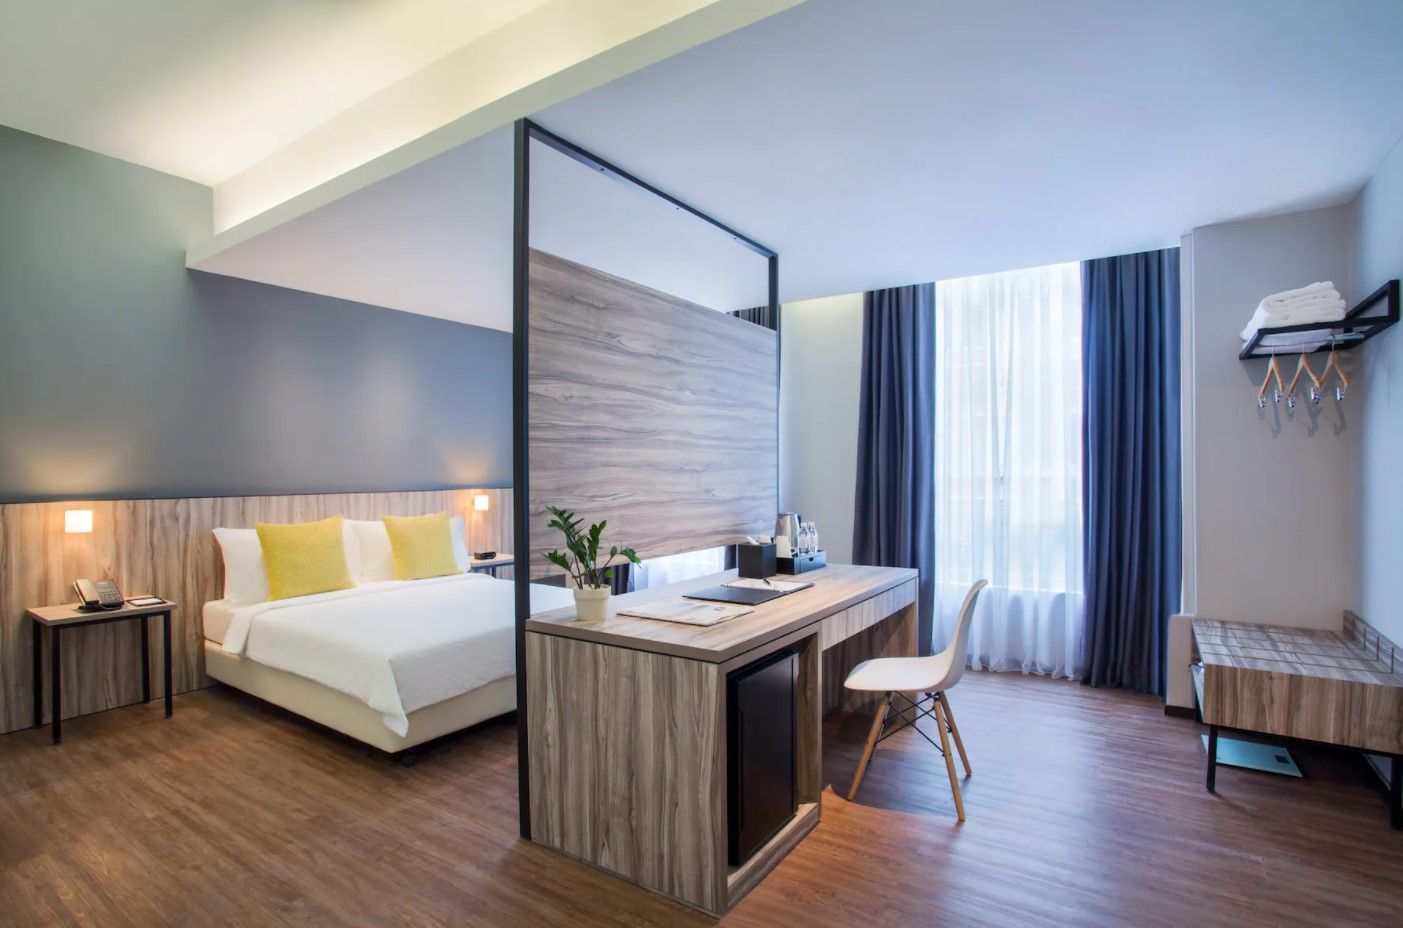 Days Hotel & Suites by Wyndham Fraser Business Park Kuala Lumpur